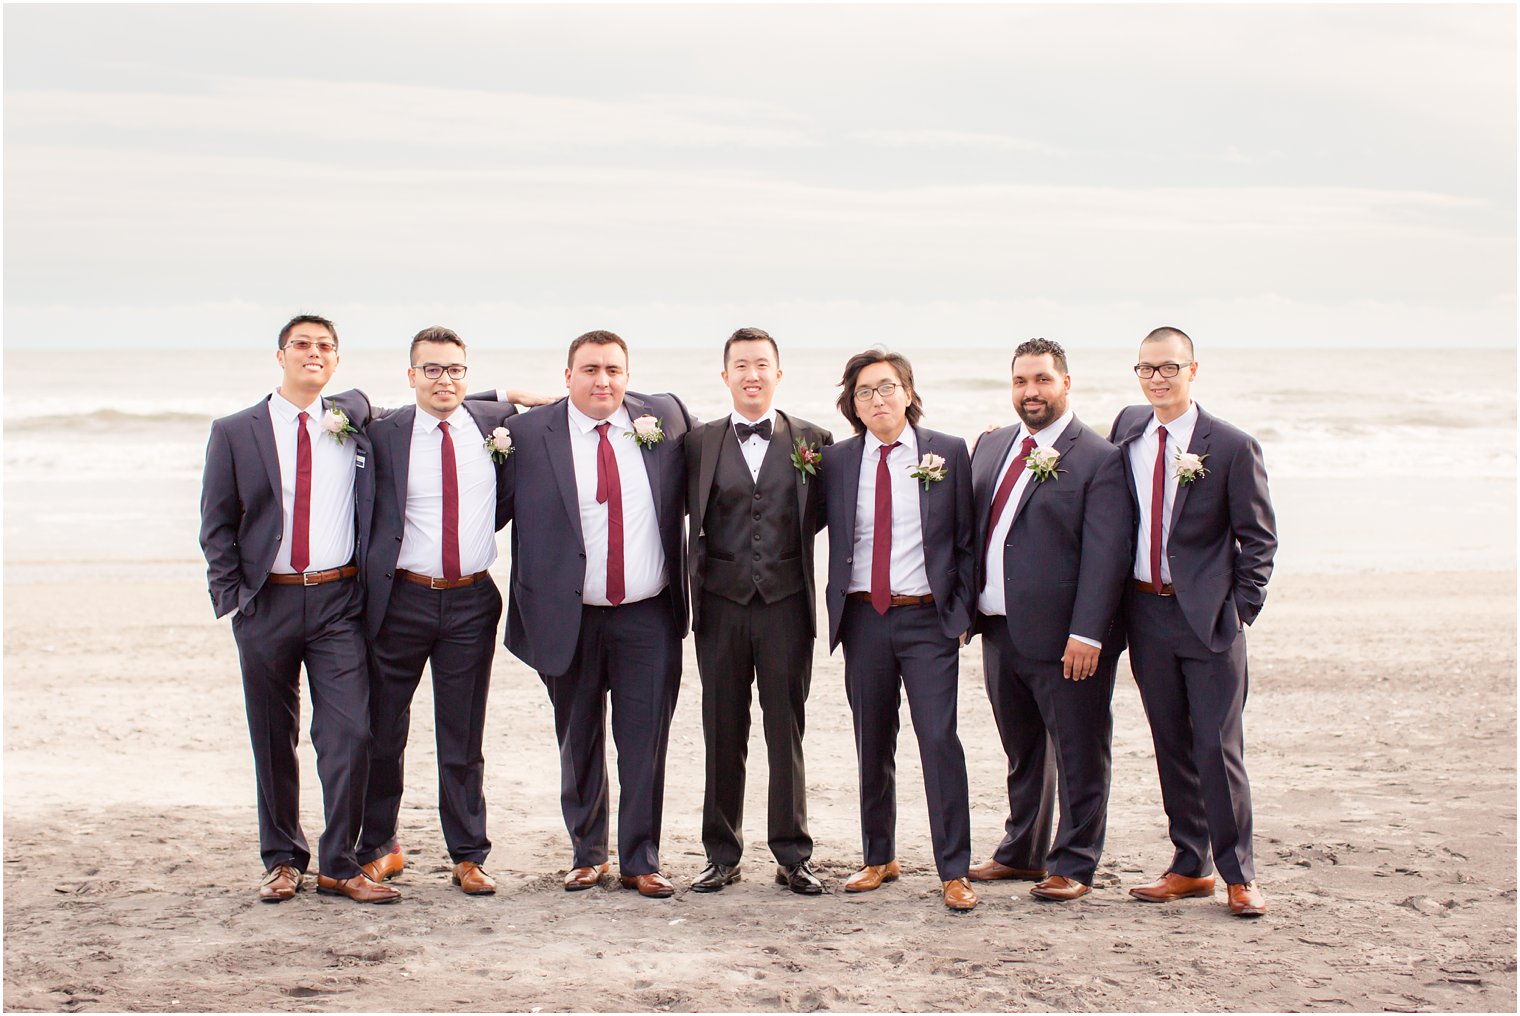 Groomsmen wearing navy suits and burgundy ties for fall wedding